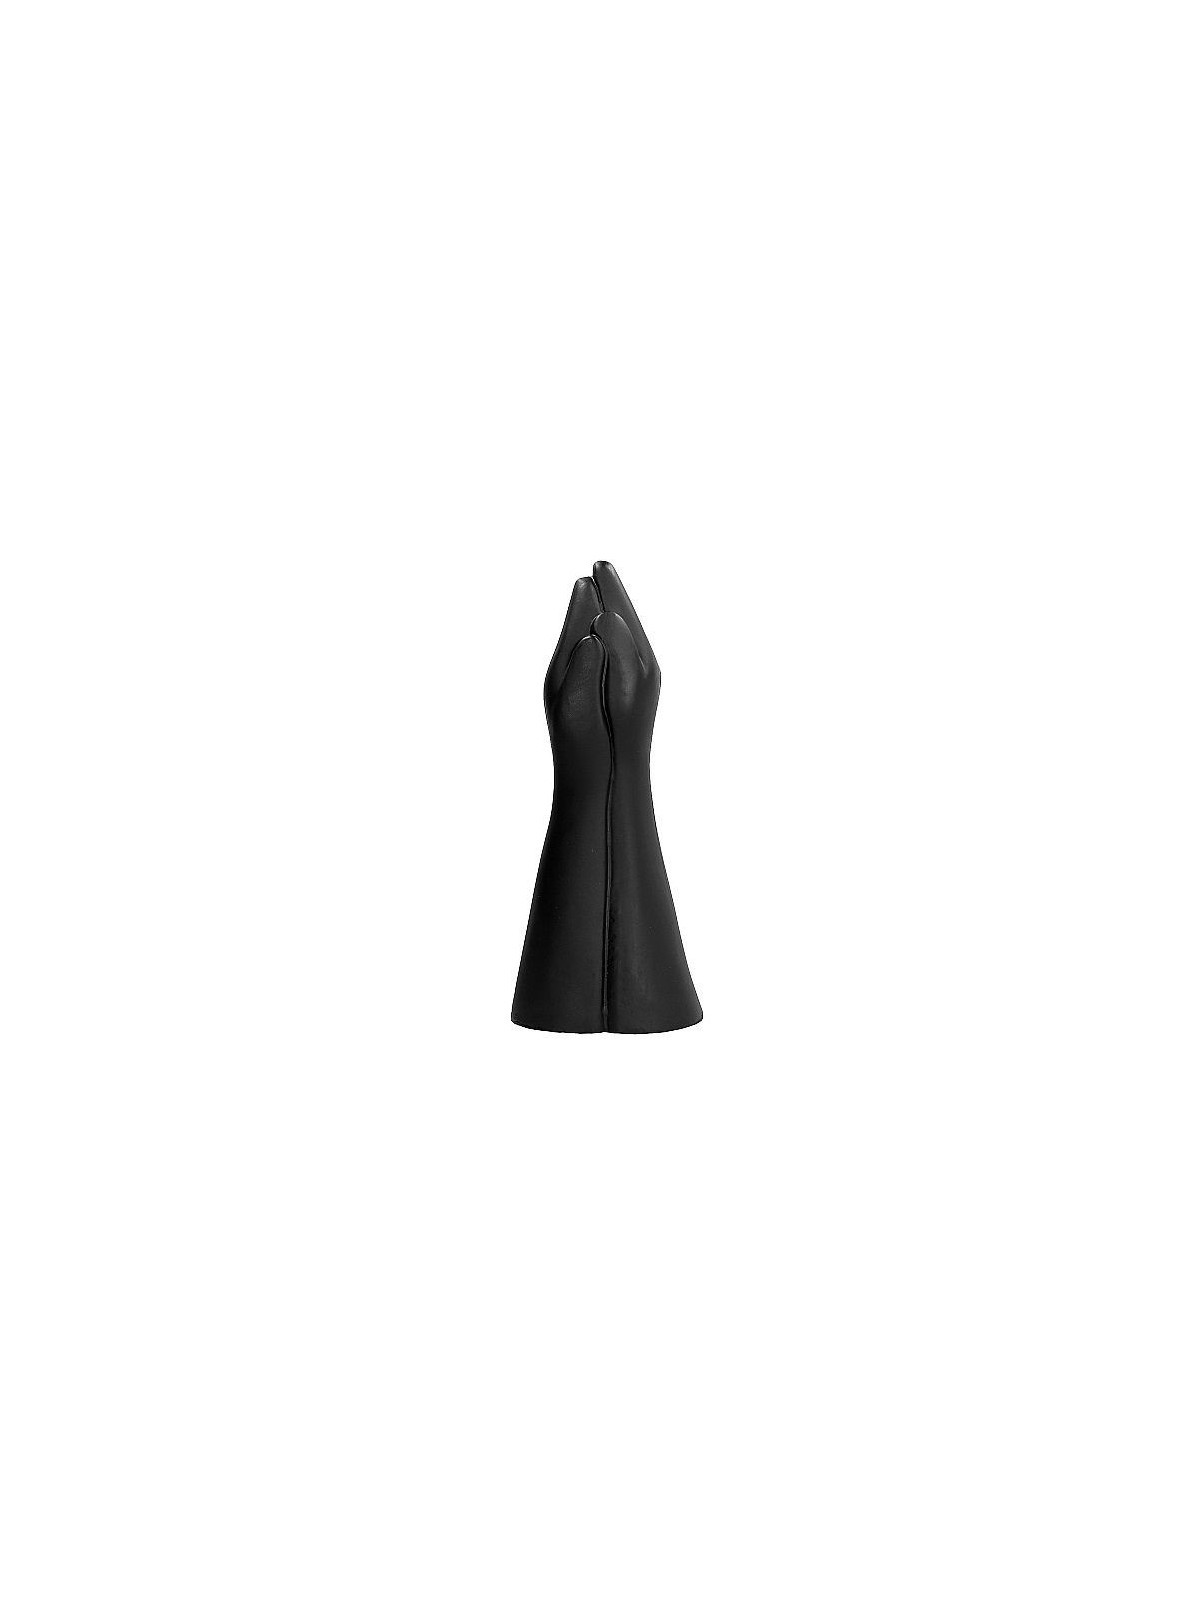 All Black Dildo Fisting 39 cm - Comprar Juguetes fisting All Black - Fisting (1)